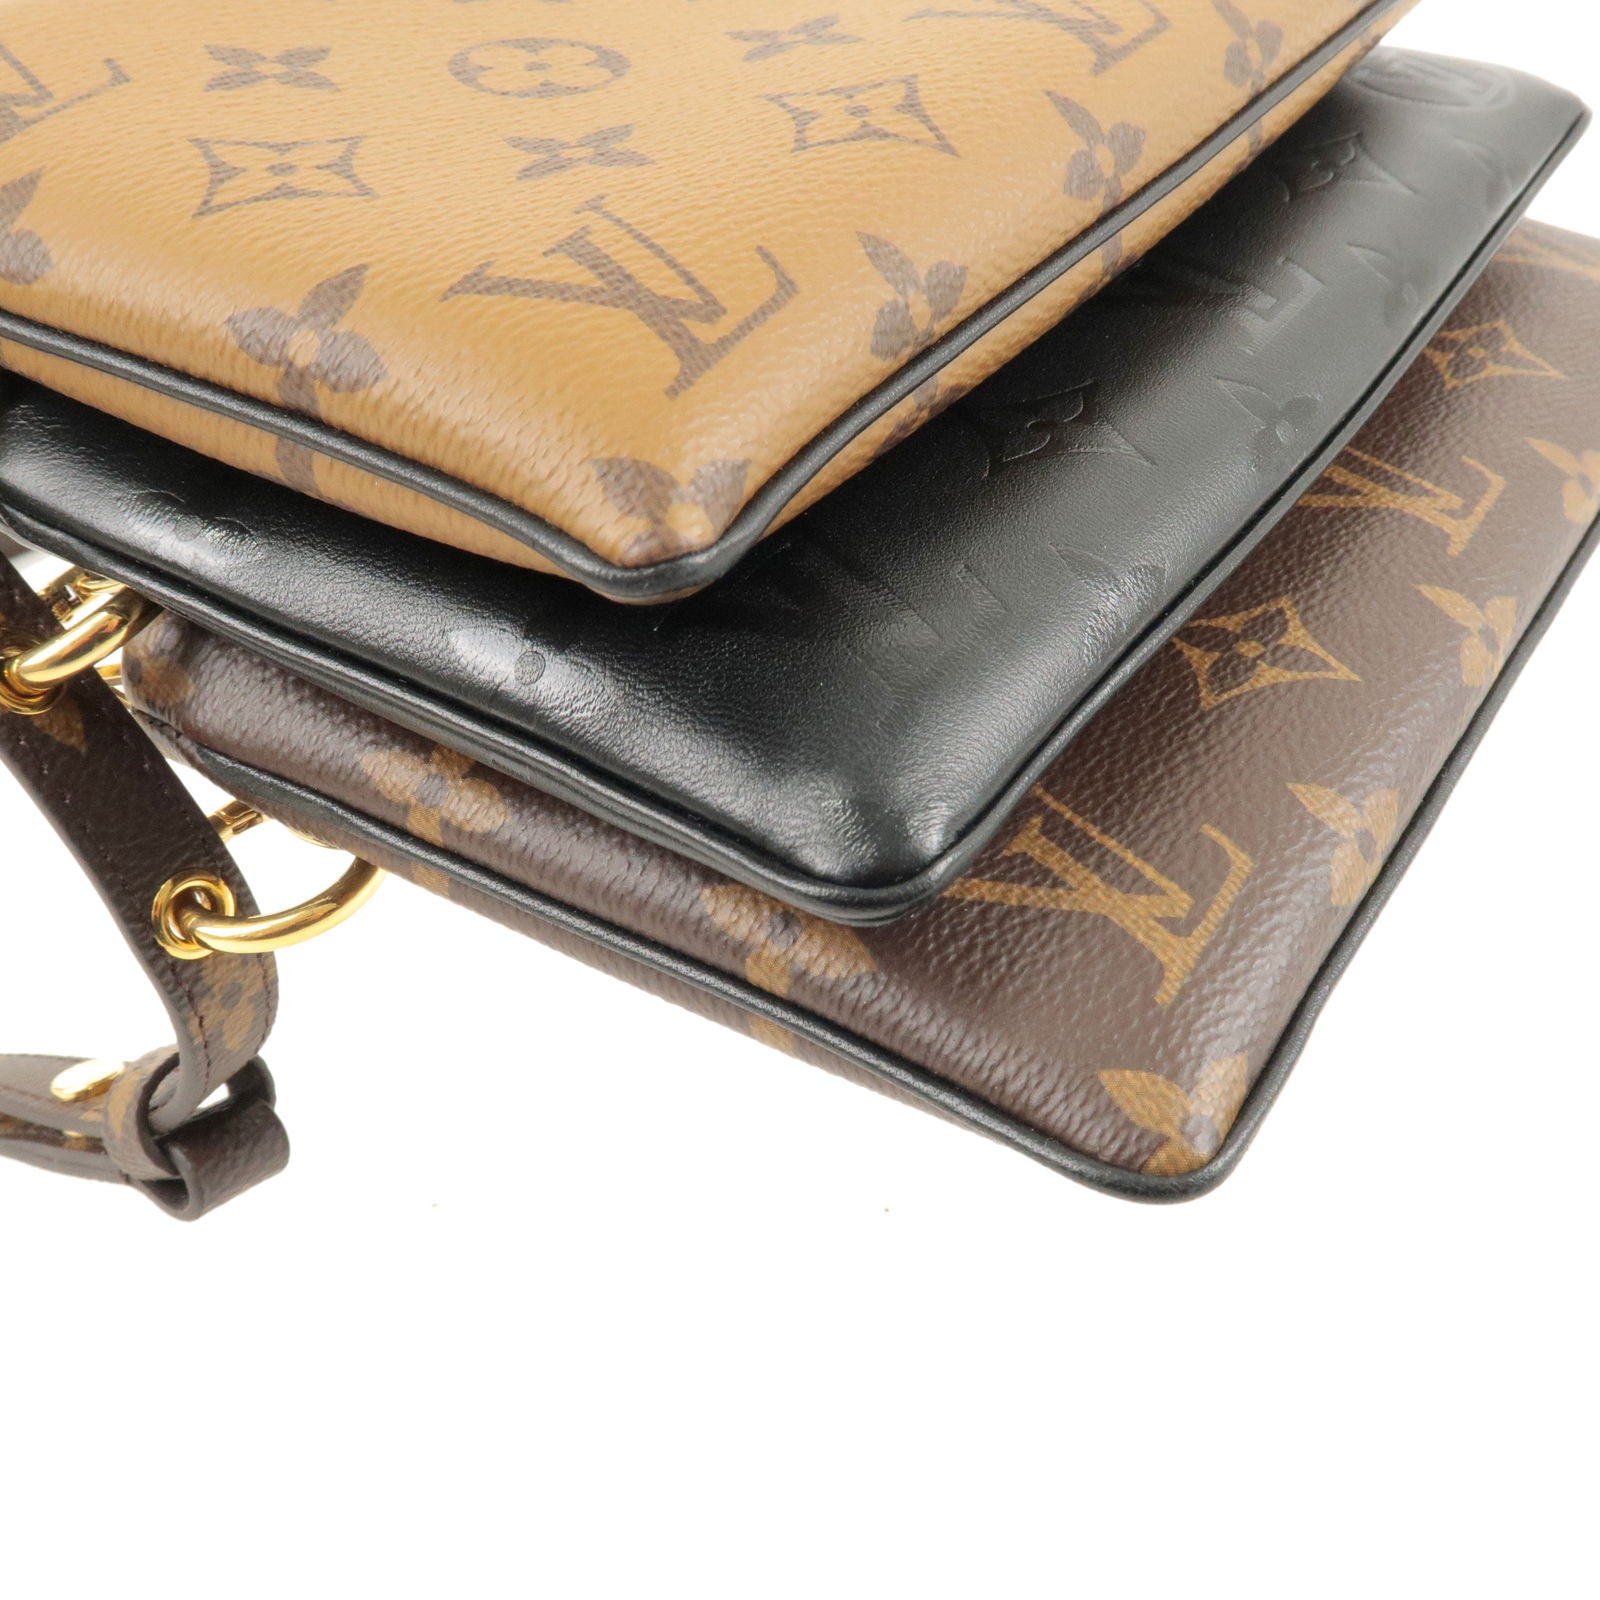 The Louis Vuitton Bag You Should Be Talking About: The LV3 Pouch - PurseBop